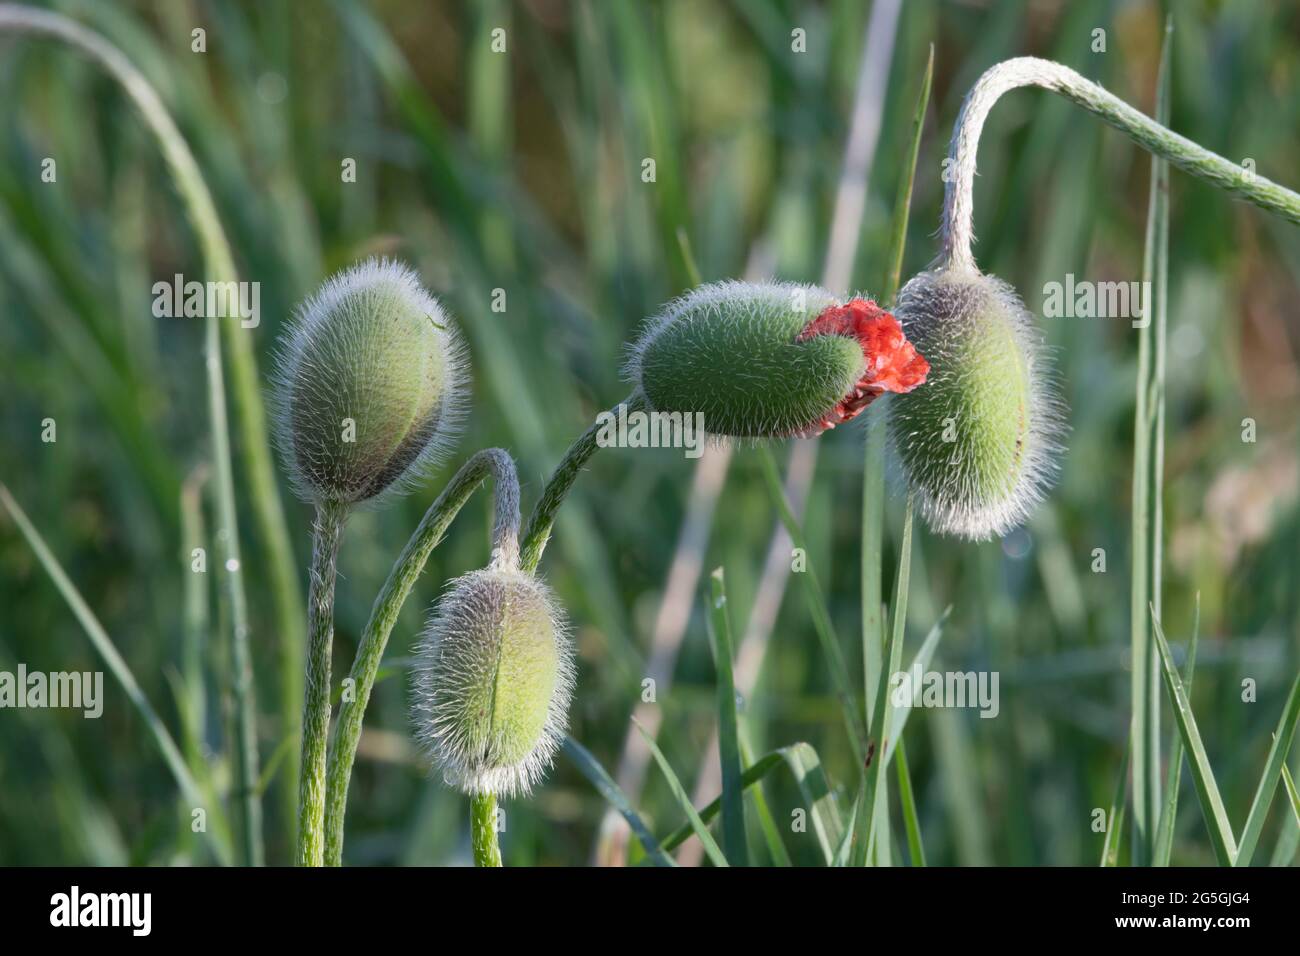 Flores sin abrir fotografías e imágenes de alta resolución - Alamy